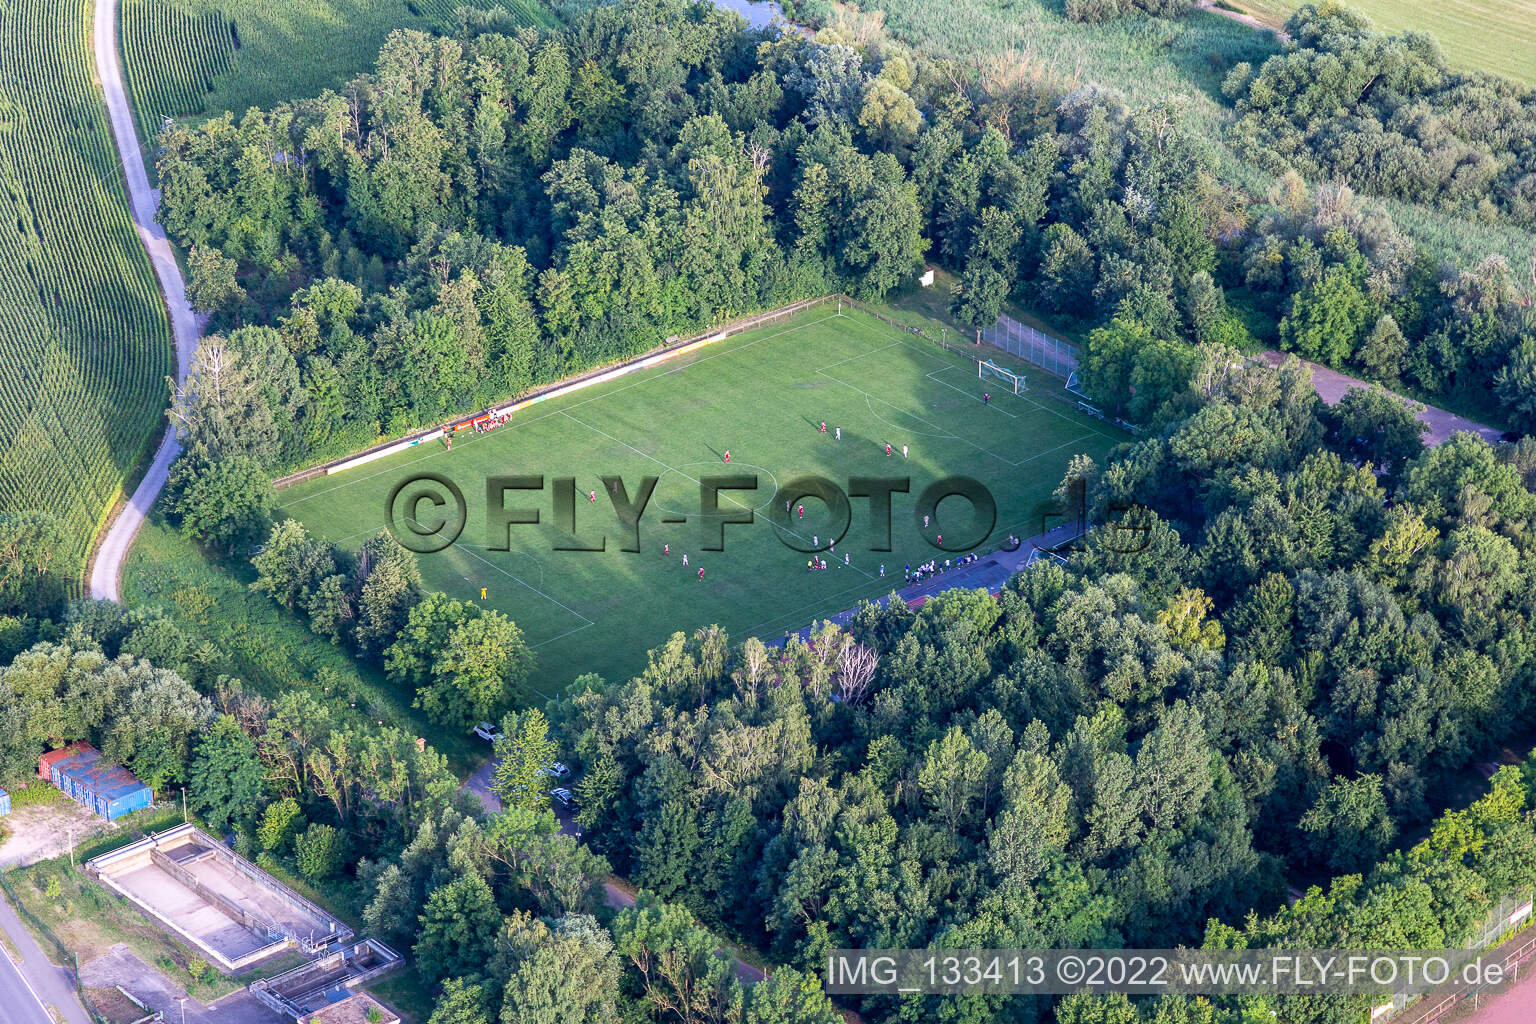 Football field in Neupotz in the state Rhineland-Palatinate, Germany